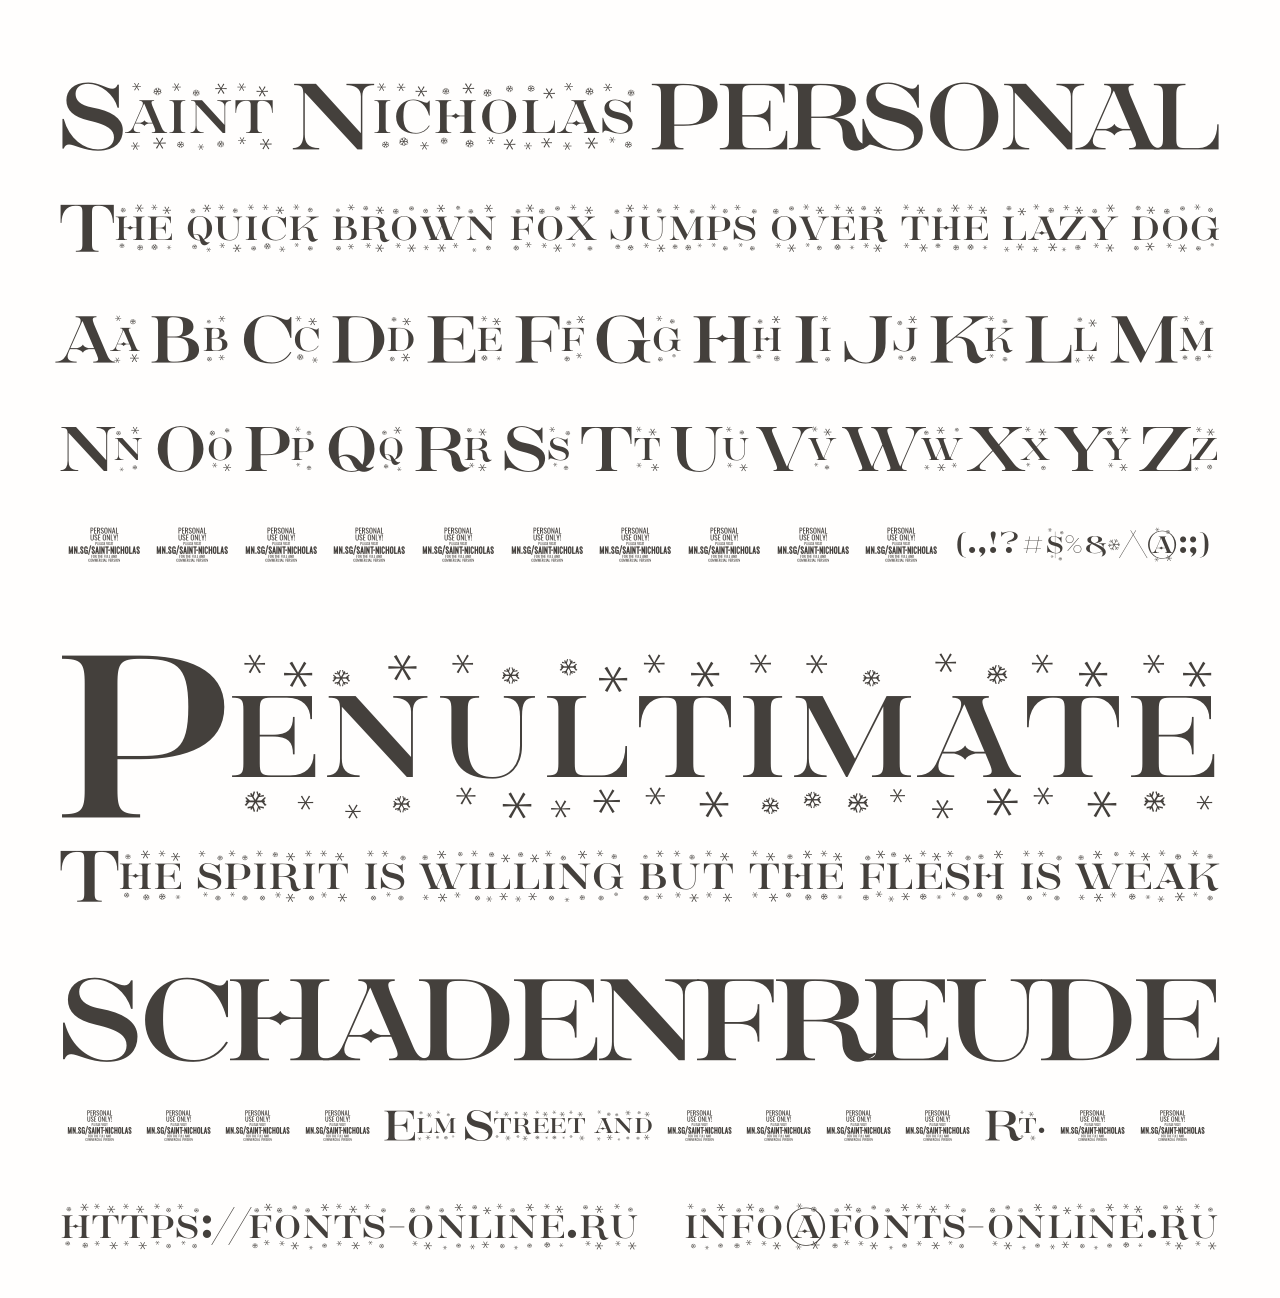 Шрифт Saint Nicholas PERSONAL